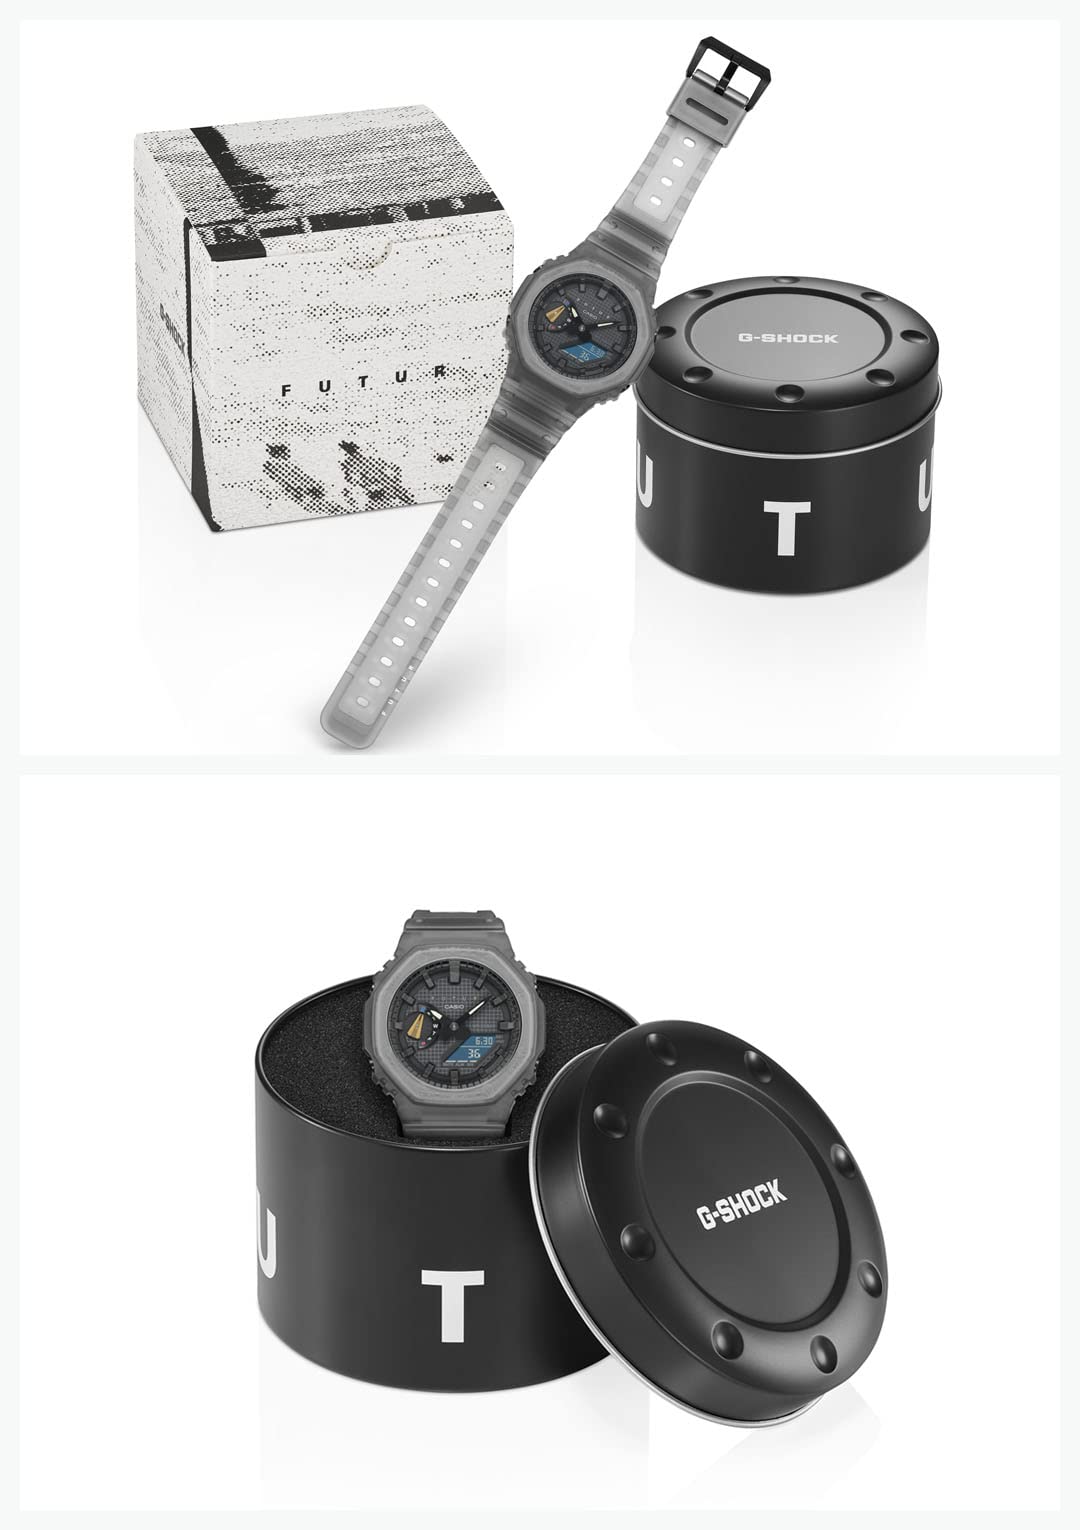 Casio GA-2100 Series Men's Carbon Core Guard Digital Analog Combination Model Wristwatch